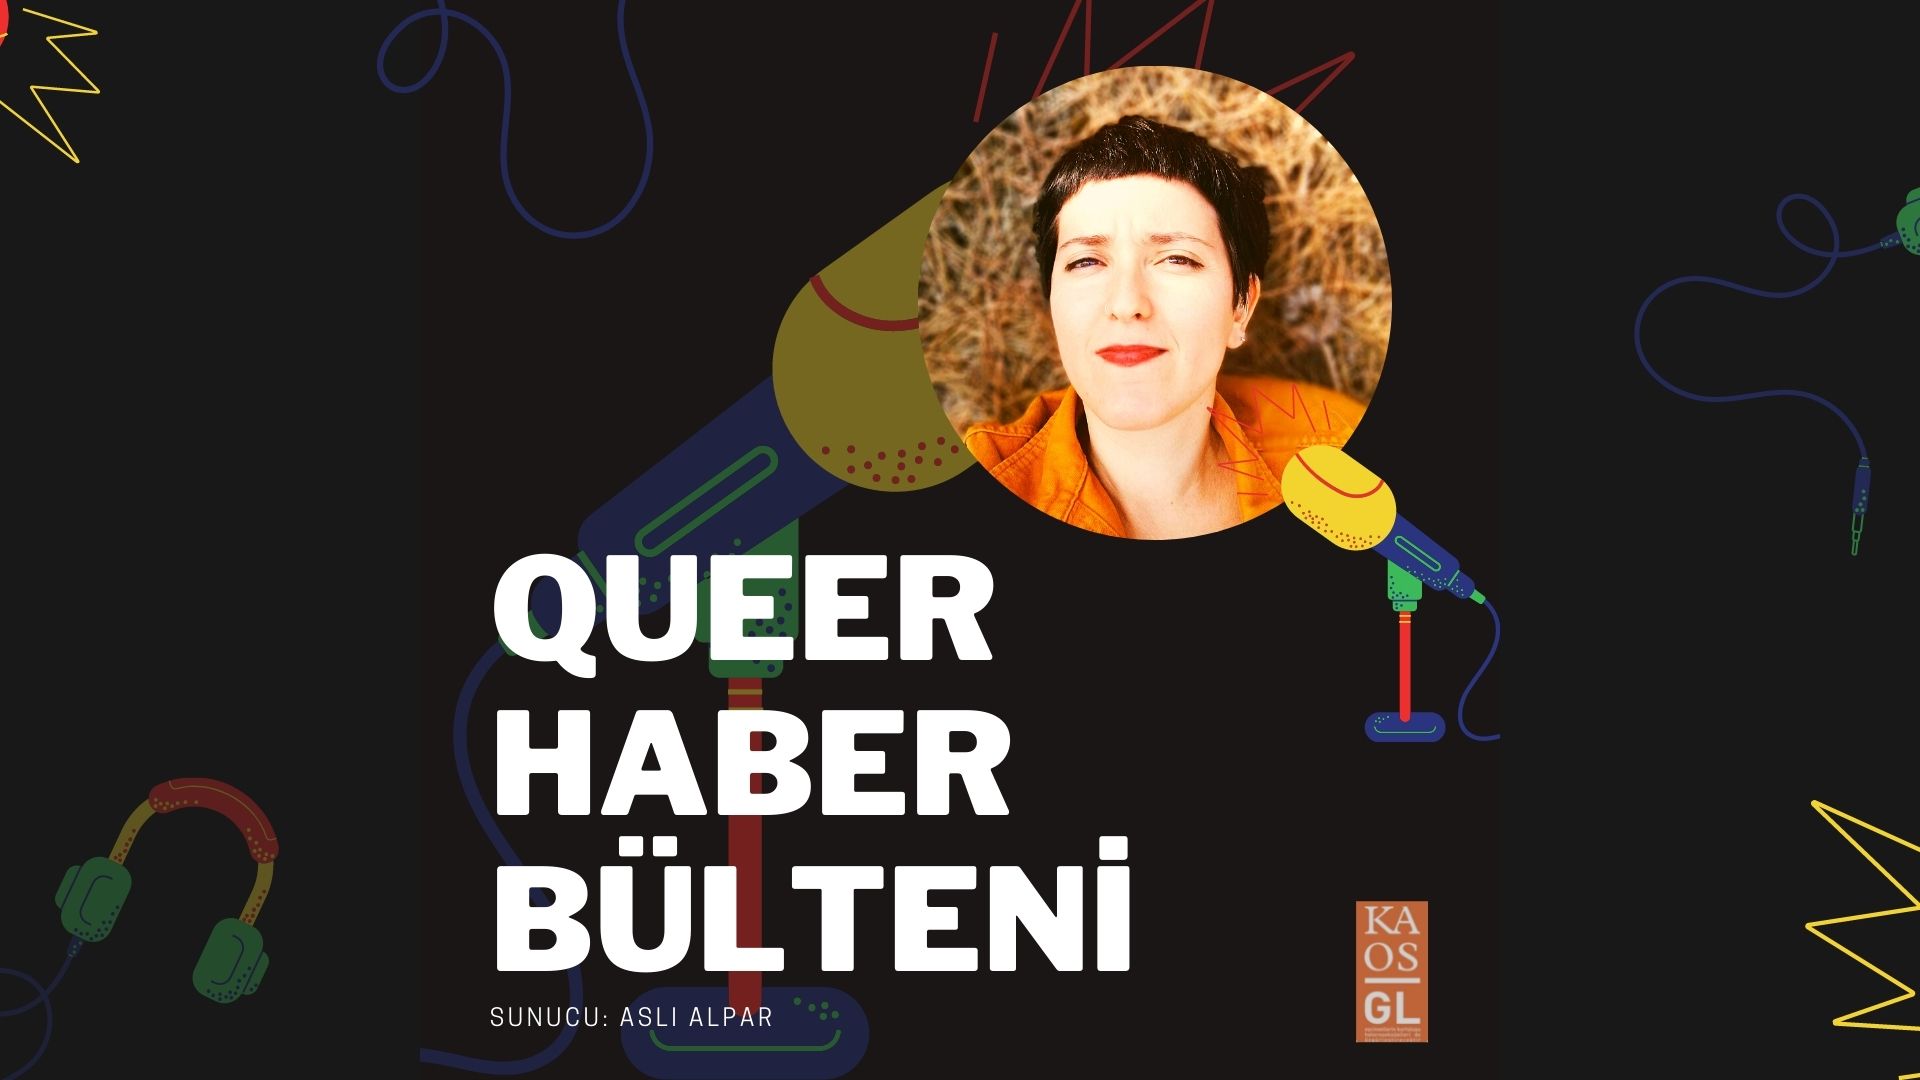 Podcast: Ekim ayı Queer Haber Bülteni | Kaos GL - LGBTİ+ Haber Portalı